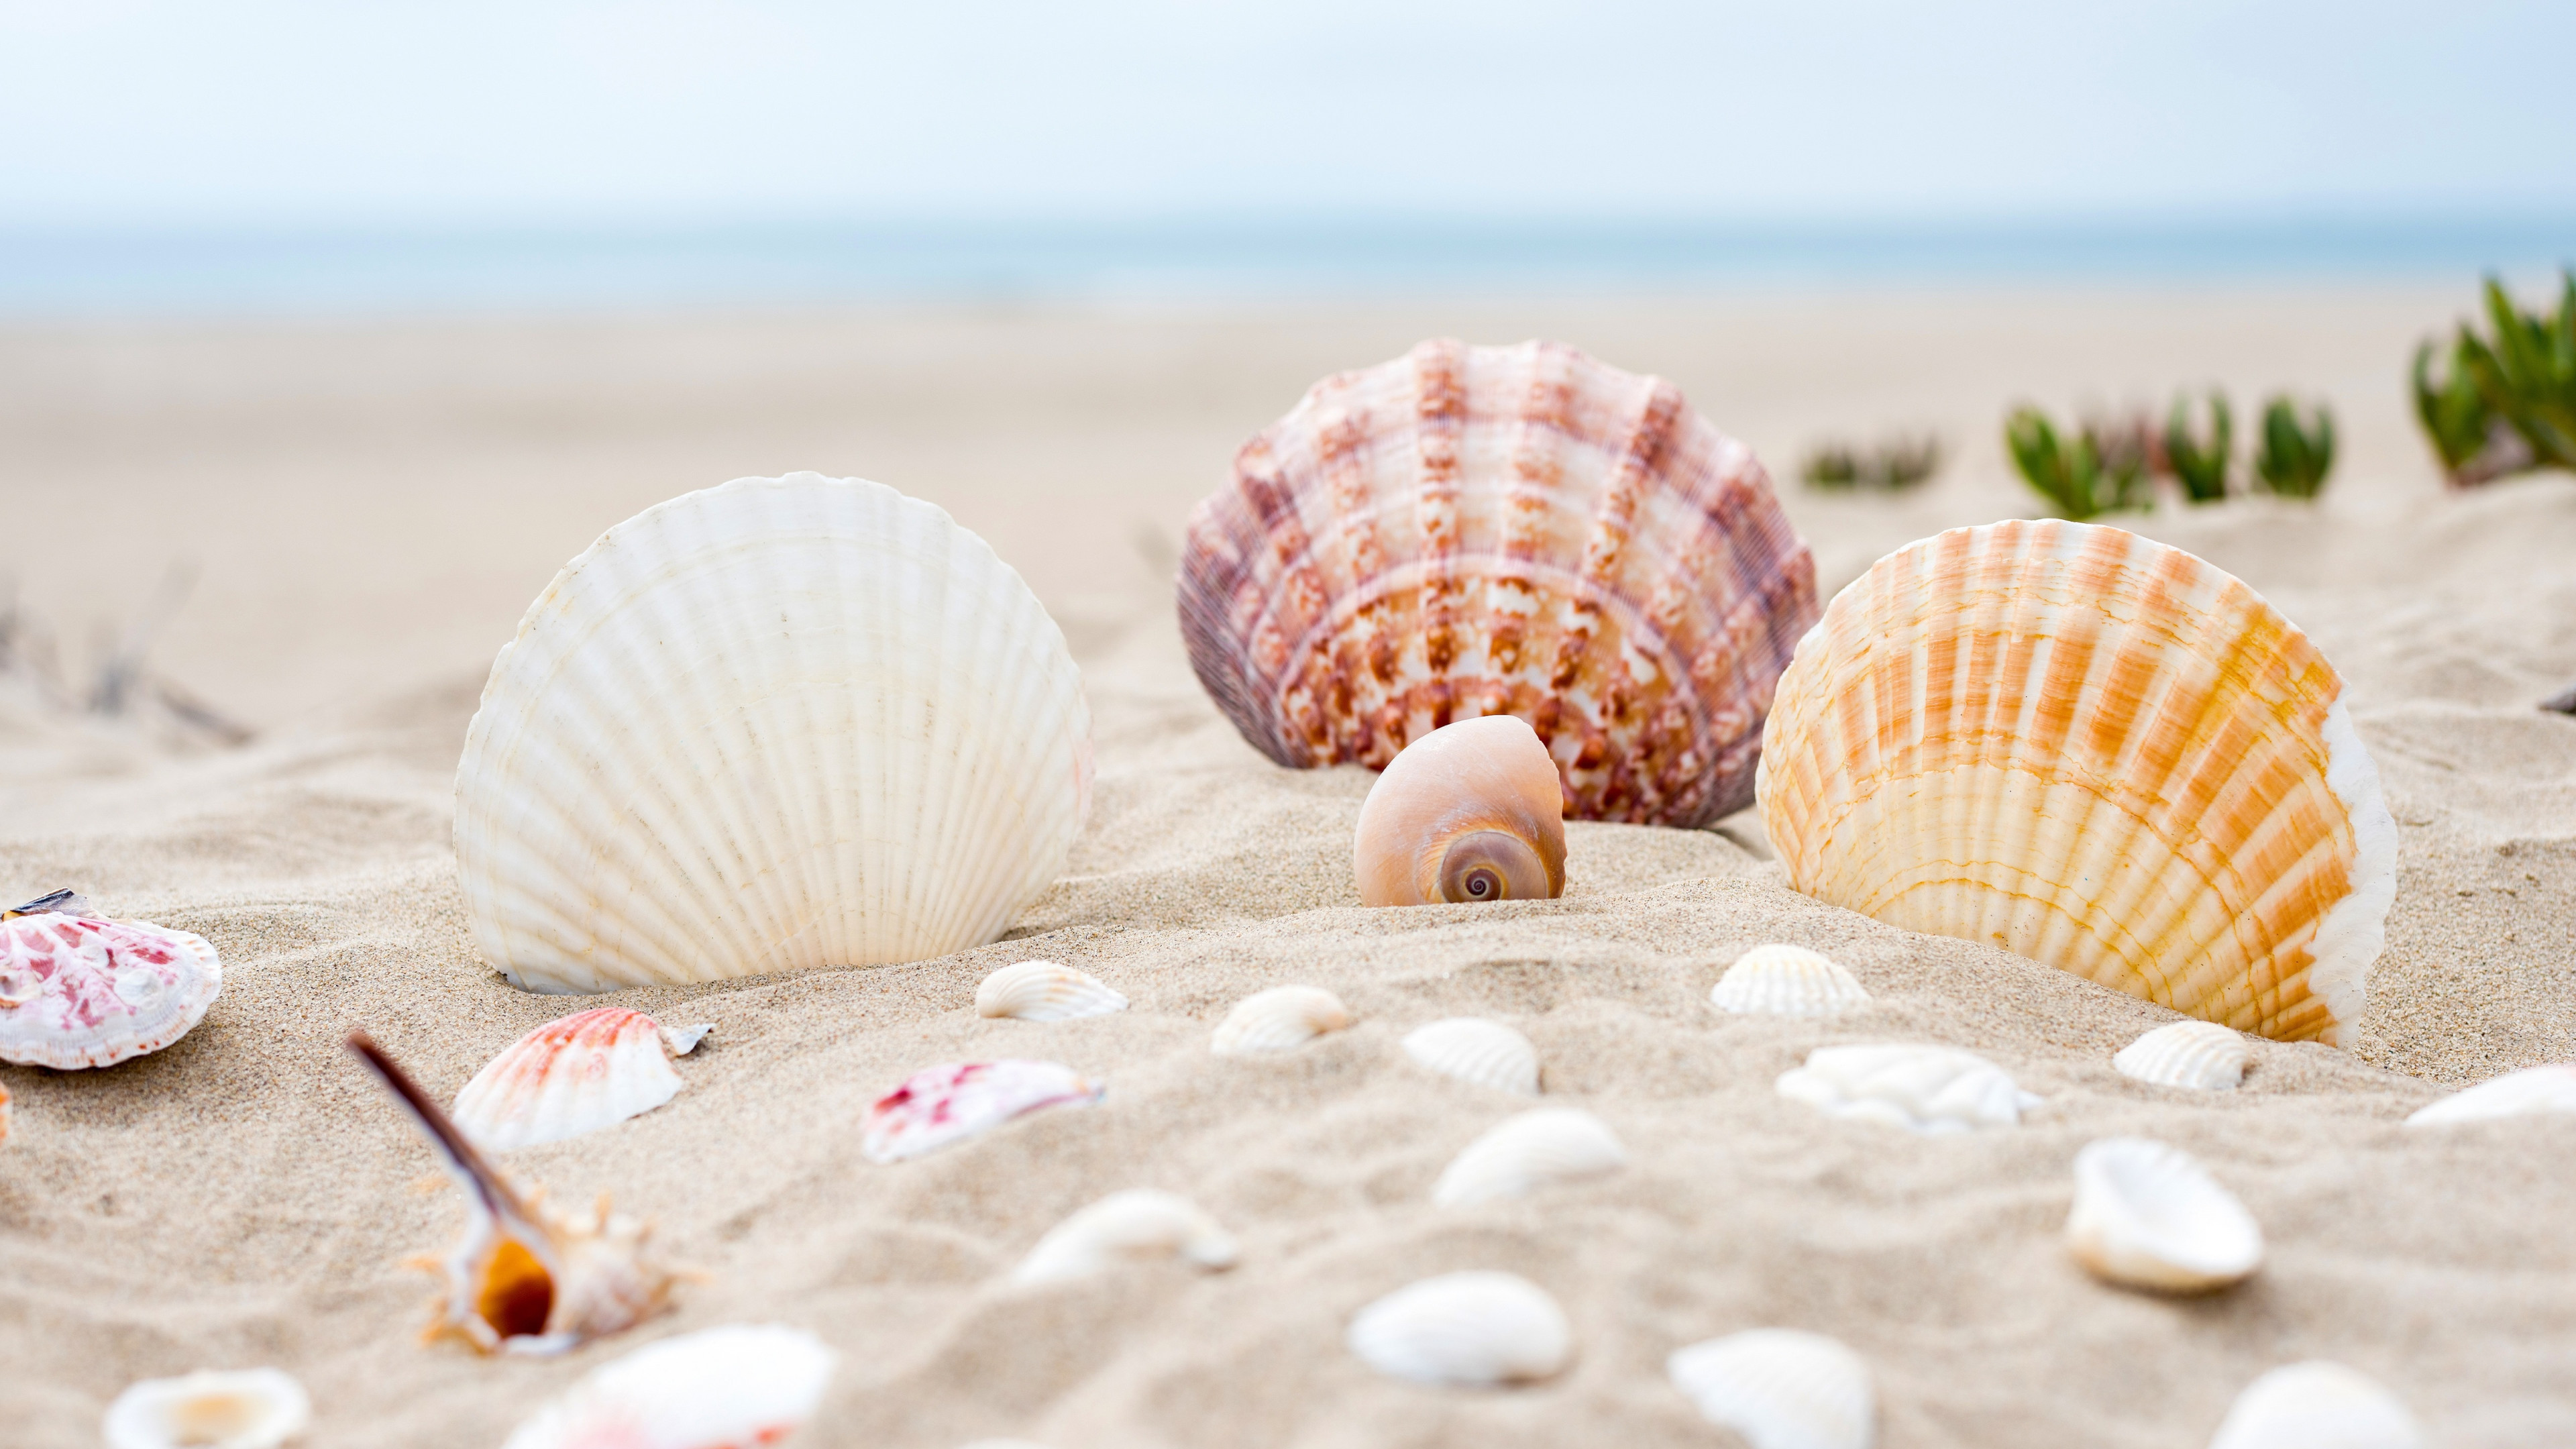 Download wallpaper: Shells on the ocean beach 3840x2160